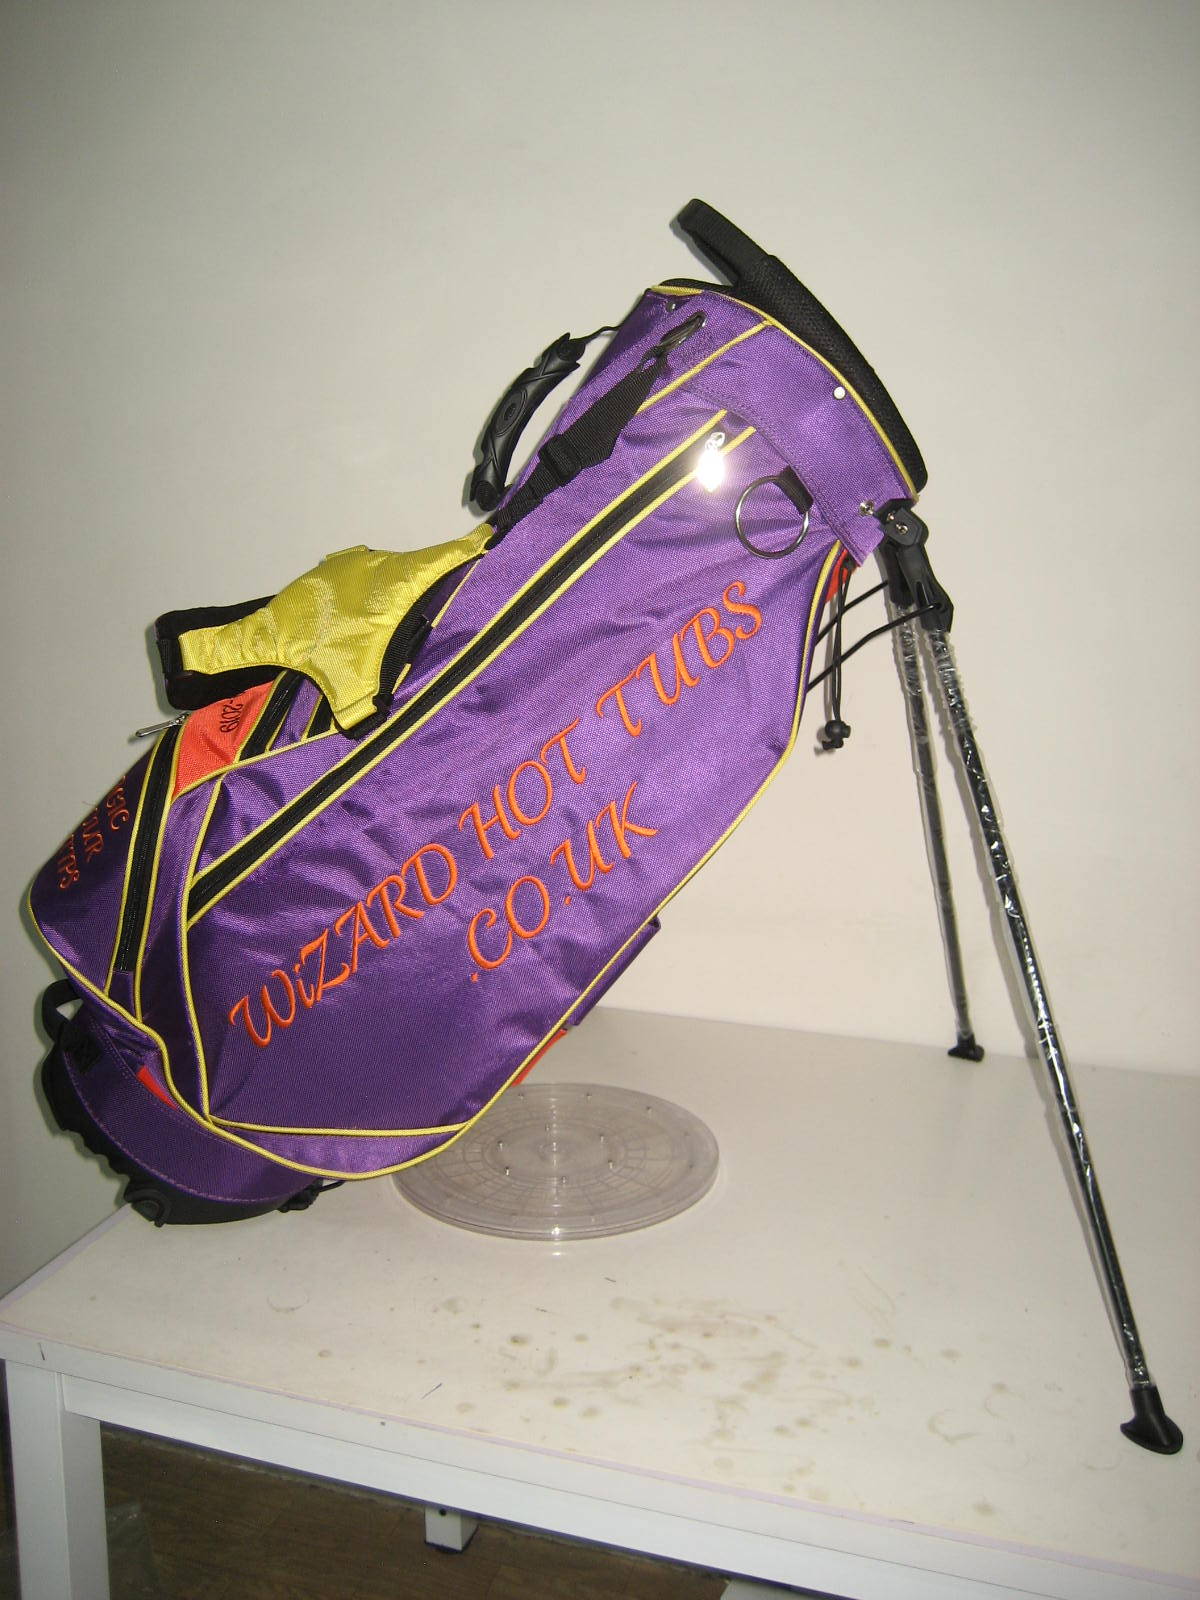 Customised football club golf bags by Golf Custom Bags 49